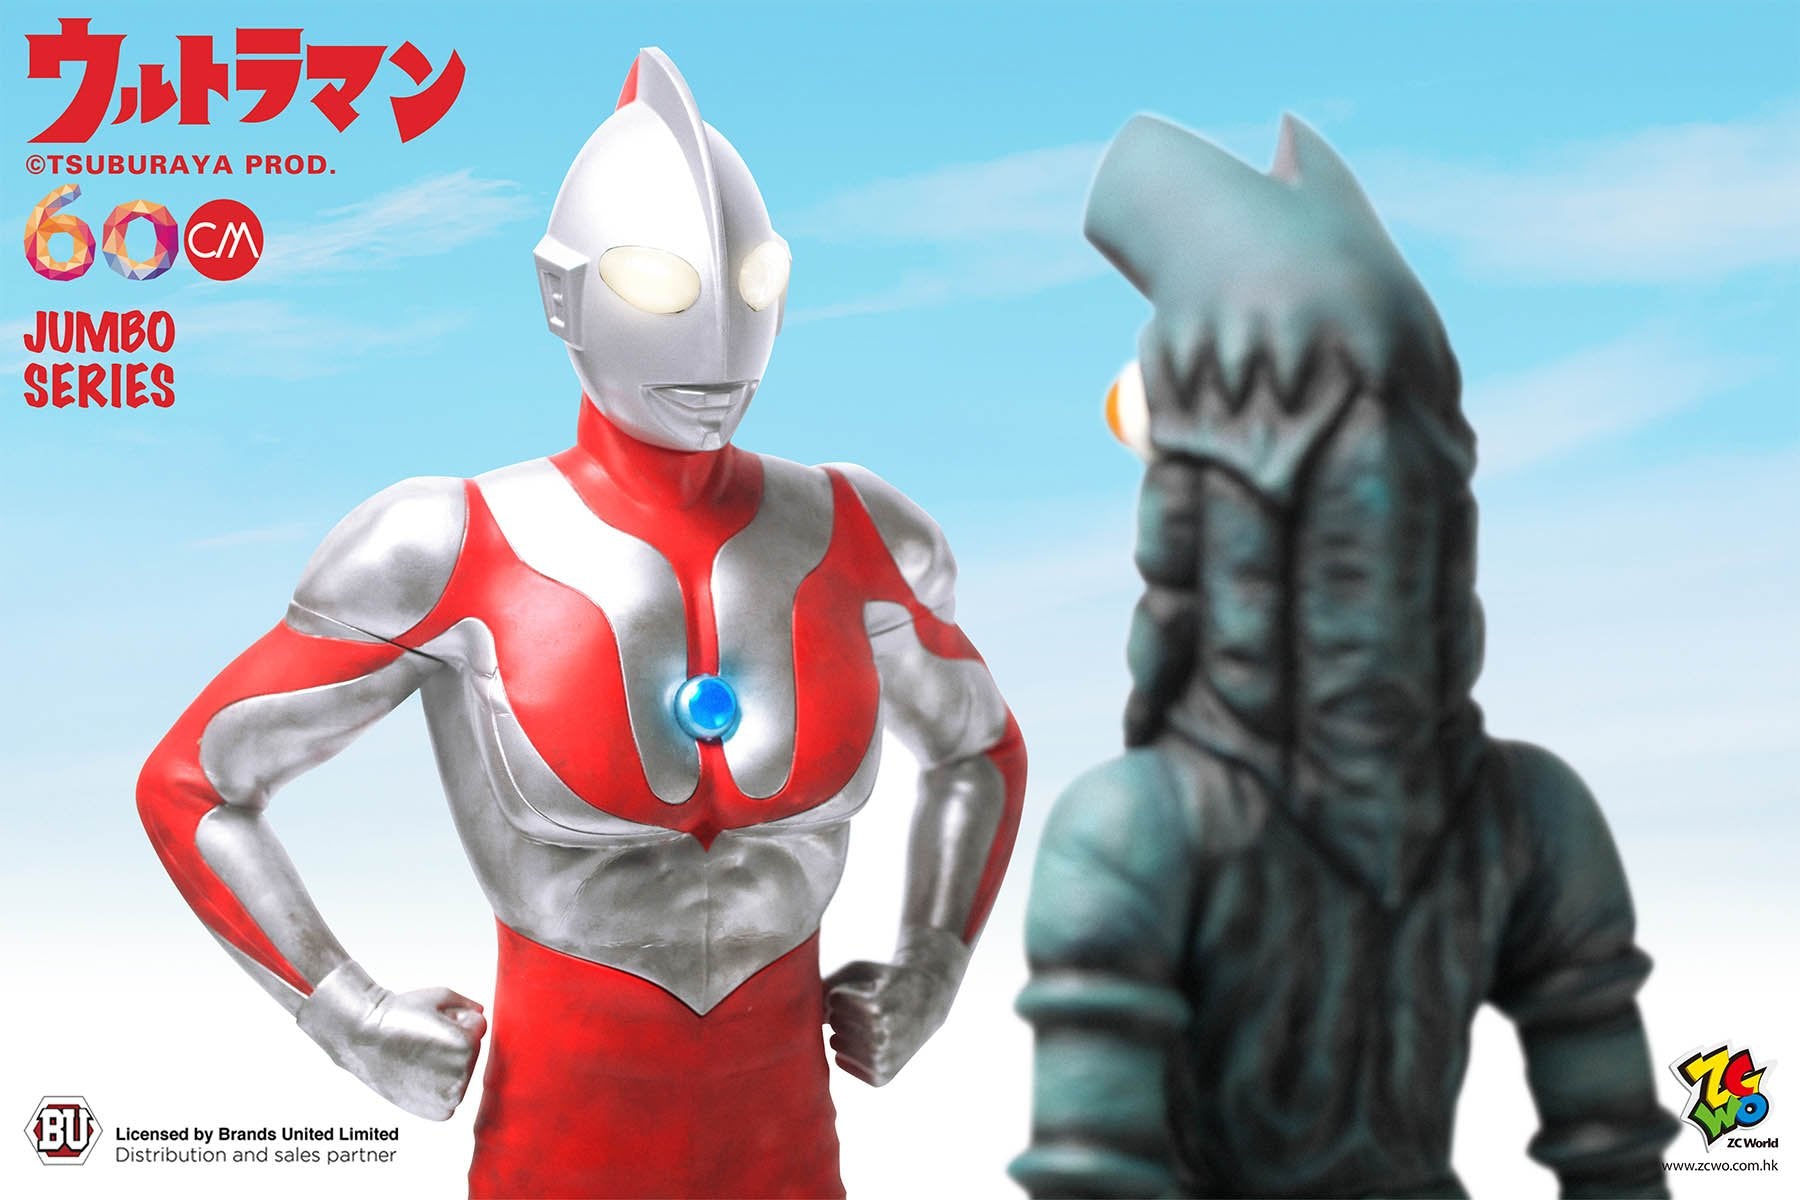 ZC World - 60cm Jumbo Series - Ultraman - Marvelous Toys